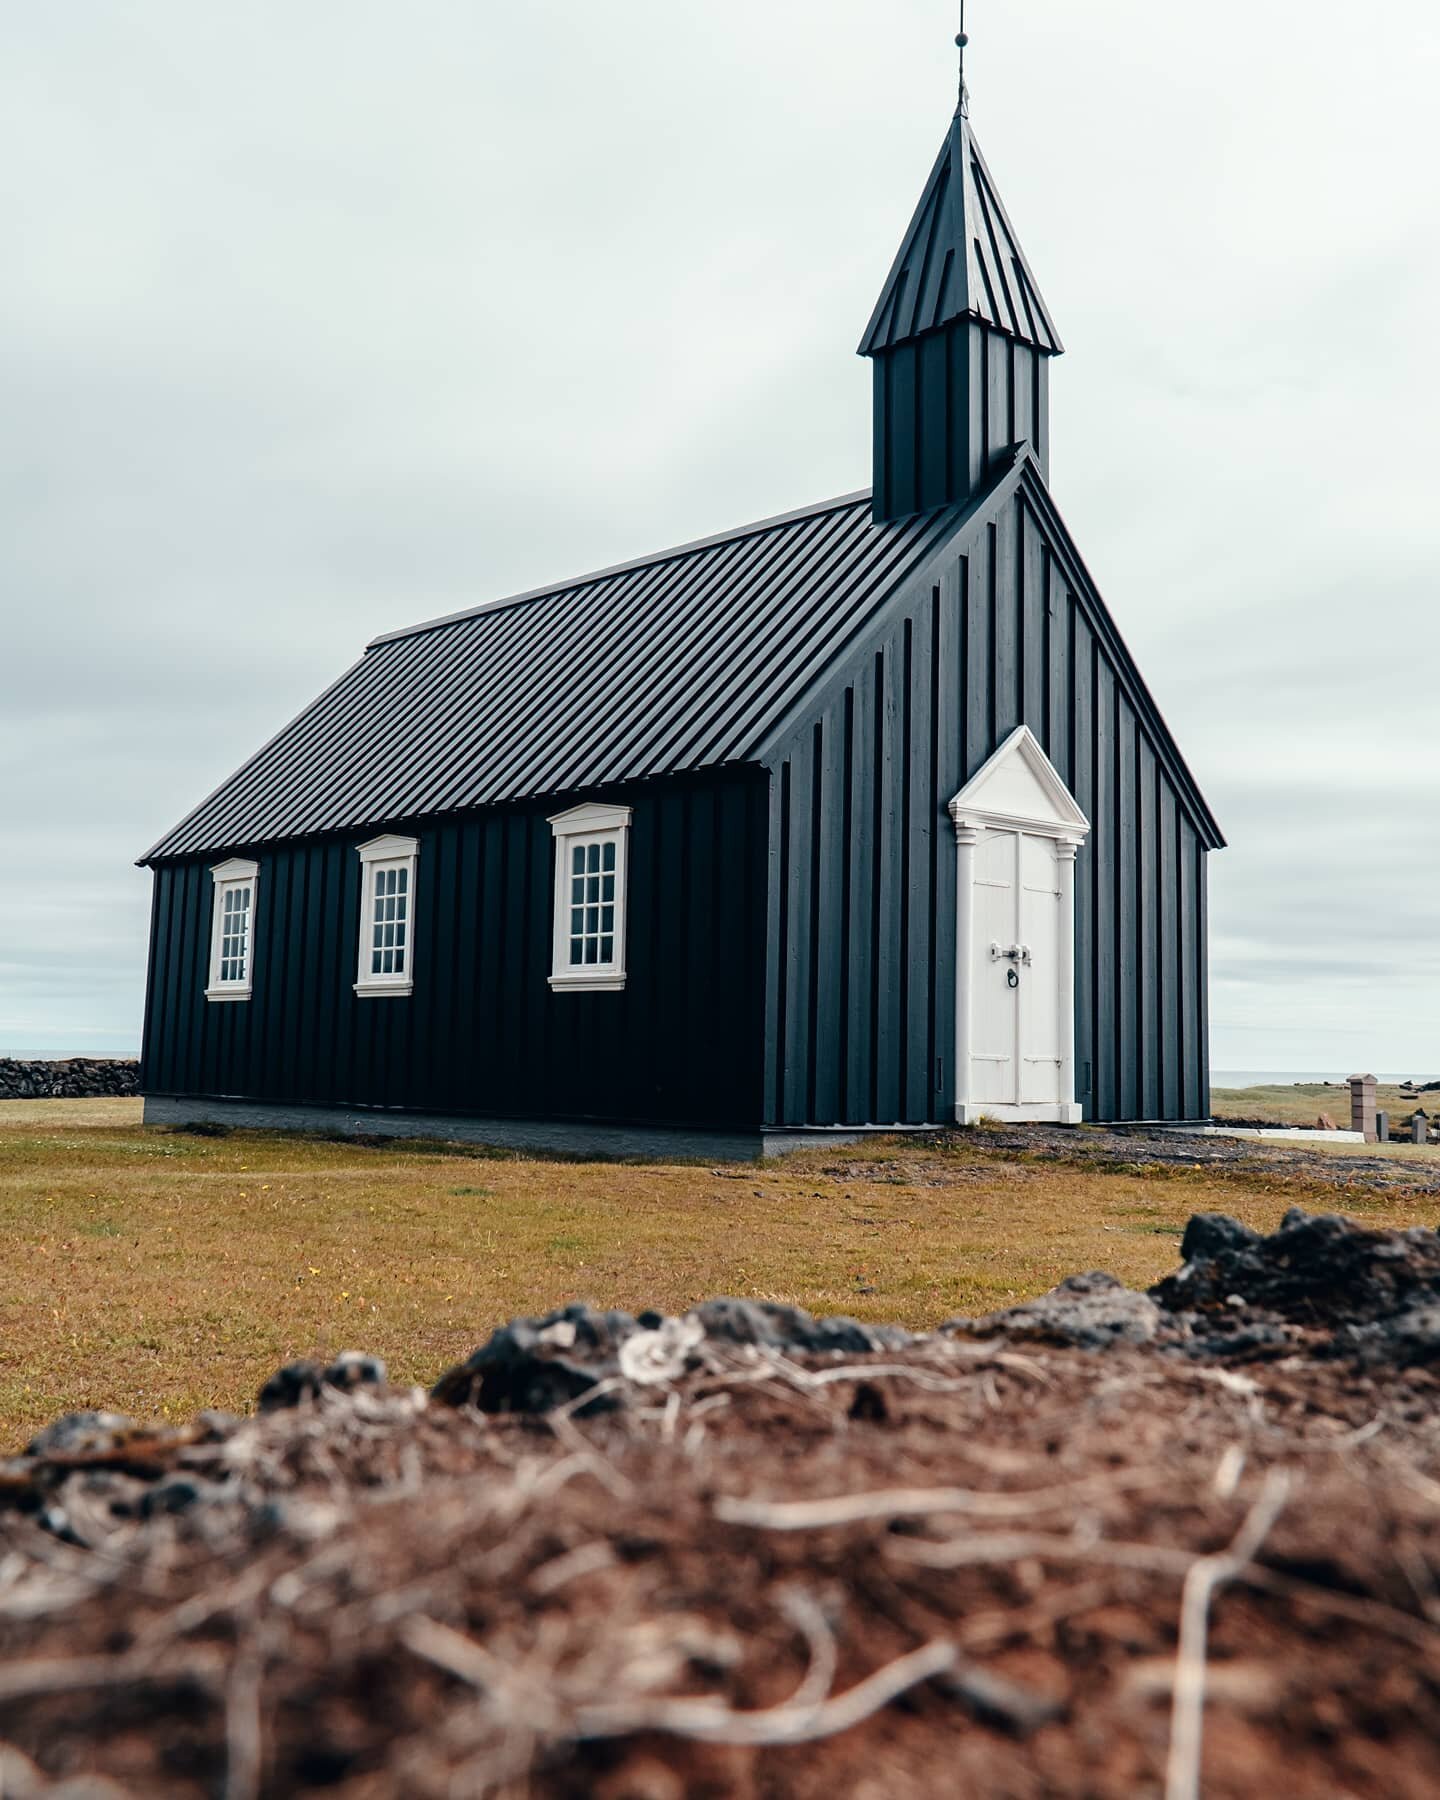 La chiesa Nera. Appositamente costruita per @marcello_smith.

Happy weekend 😂

#blackchurch #iceland #islanda #marcellobello #graveyard #budir #budirblackchurch